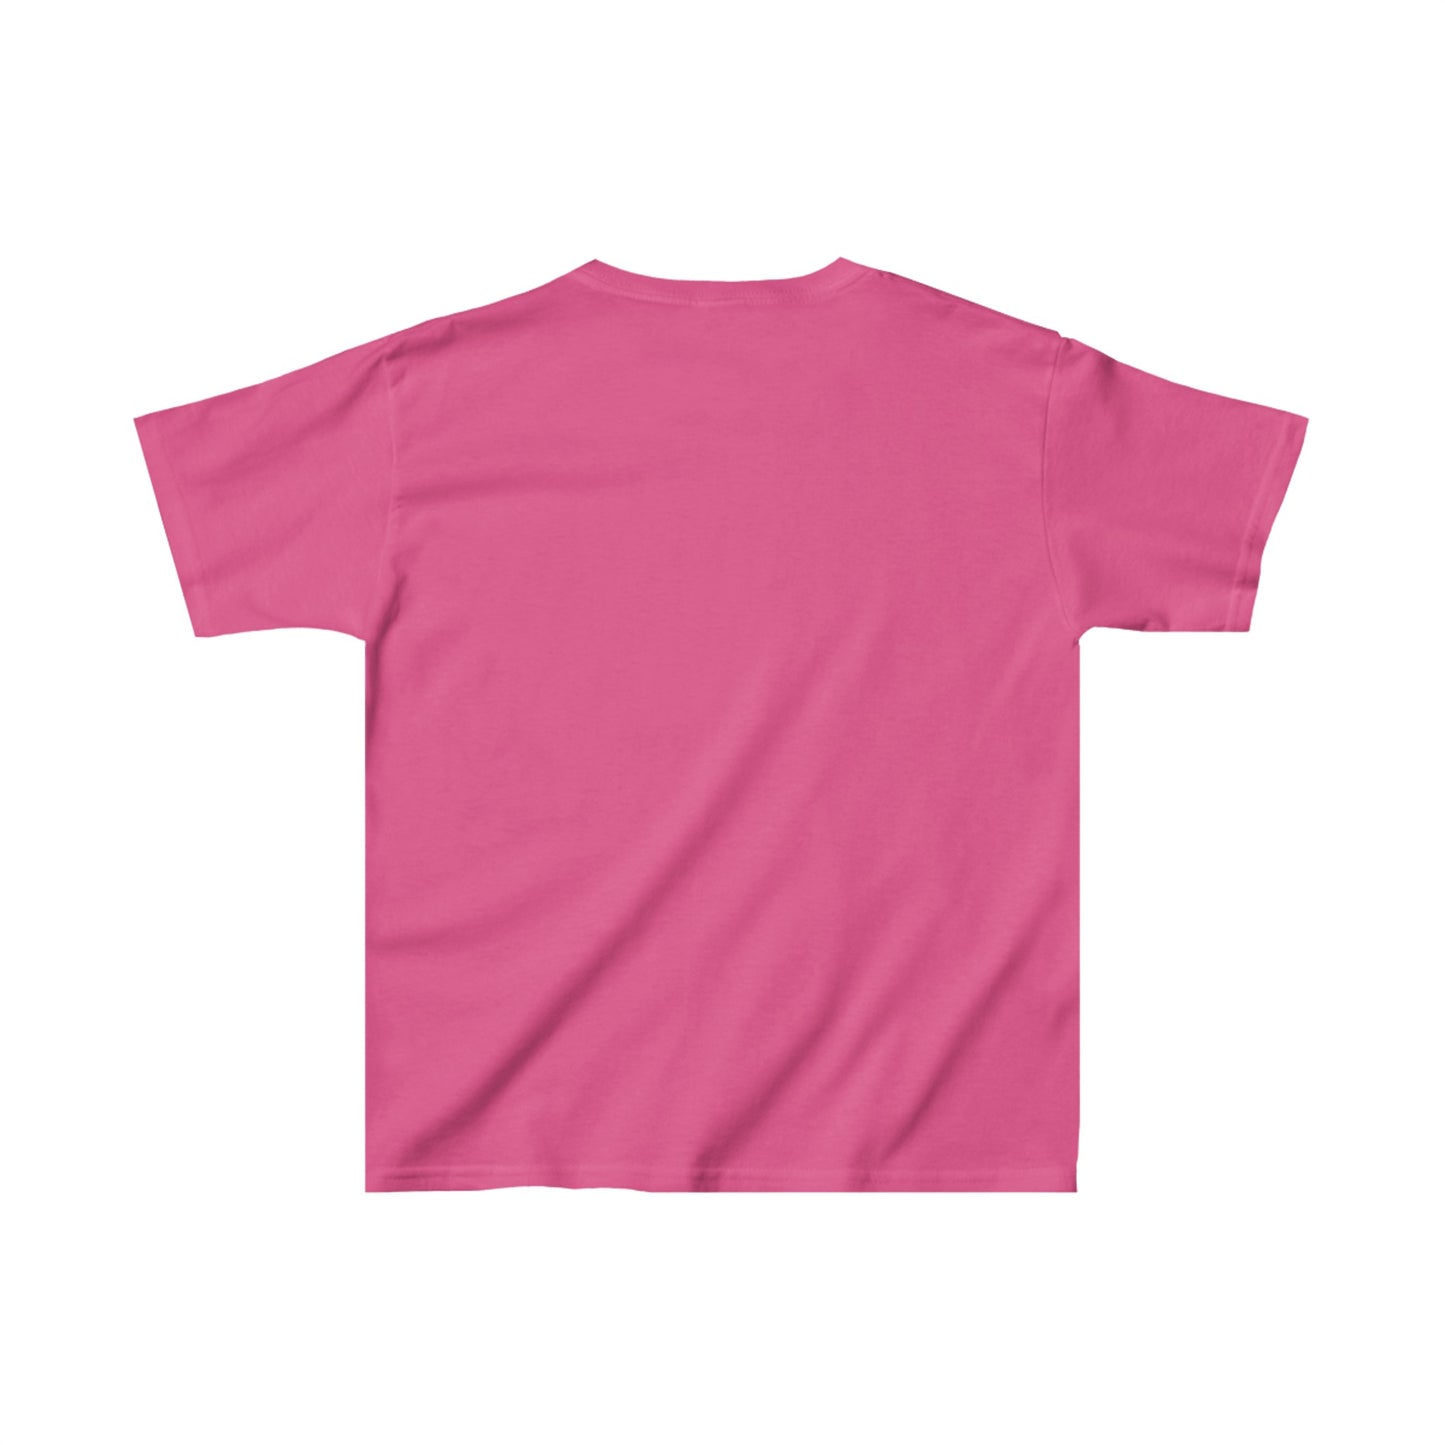 Kids Dayenu short sleeve t-shirt